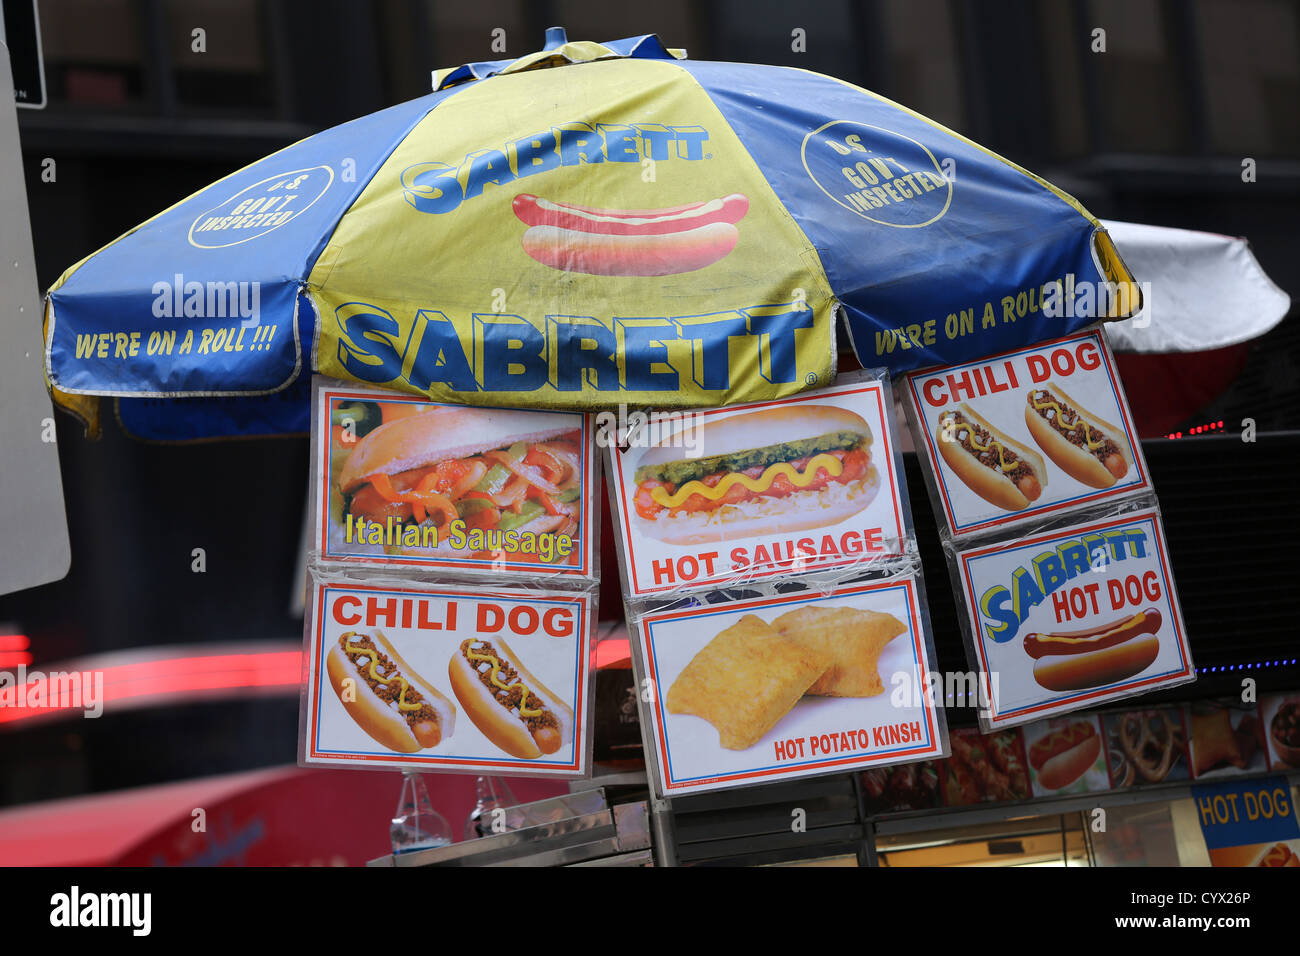 Hot dog vendors umbrella in New York Stock Photo